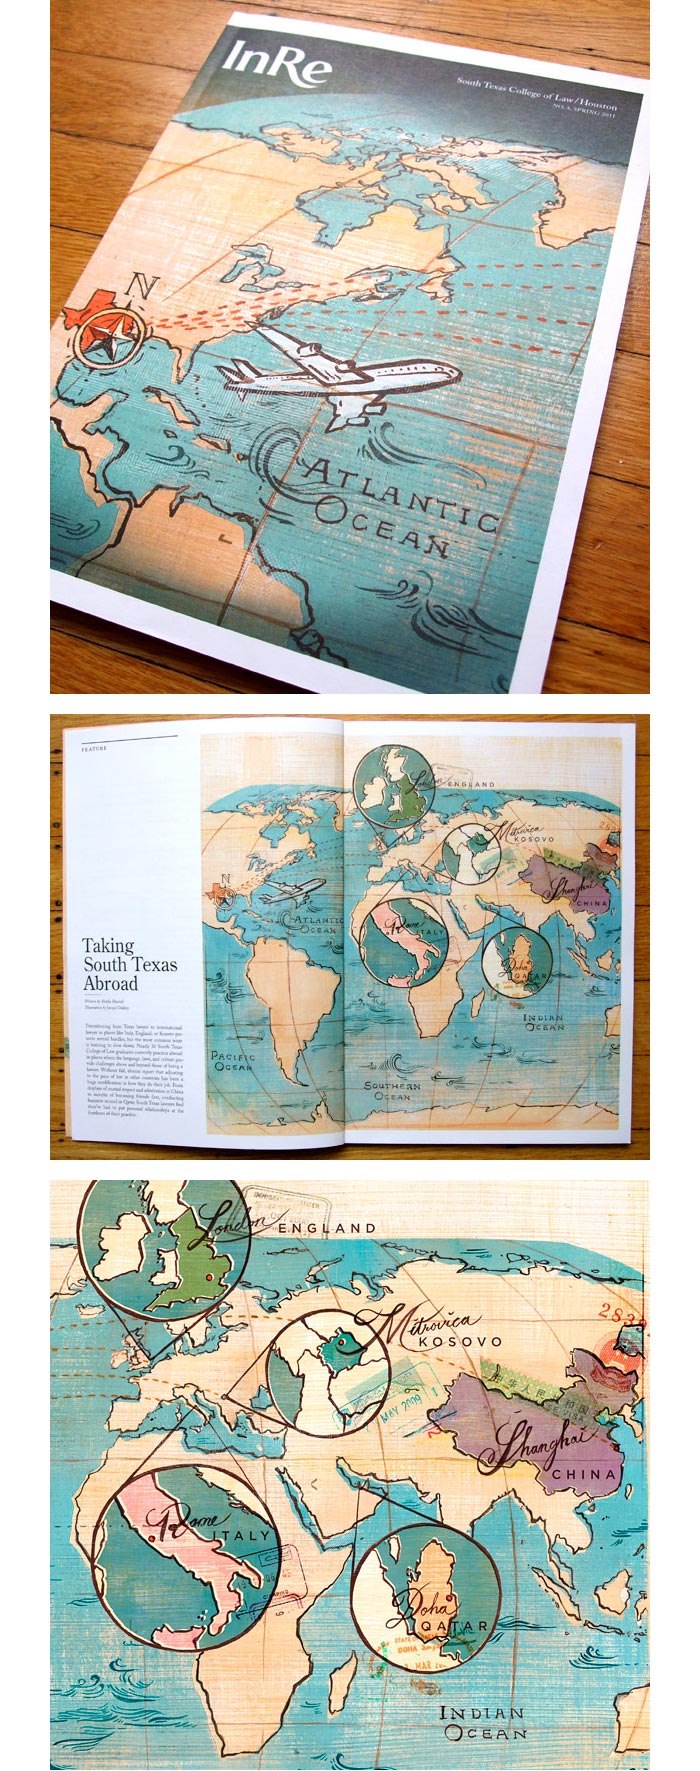 Jacqui Oakley / Illustration & book design - Taking South Texas Abroad